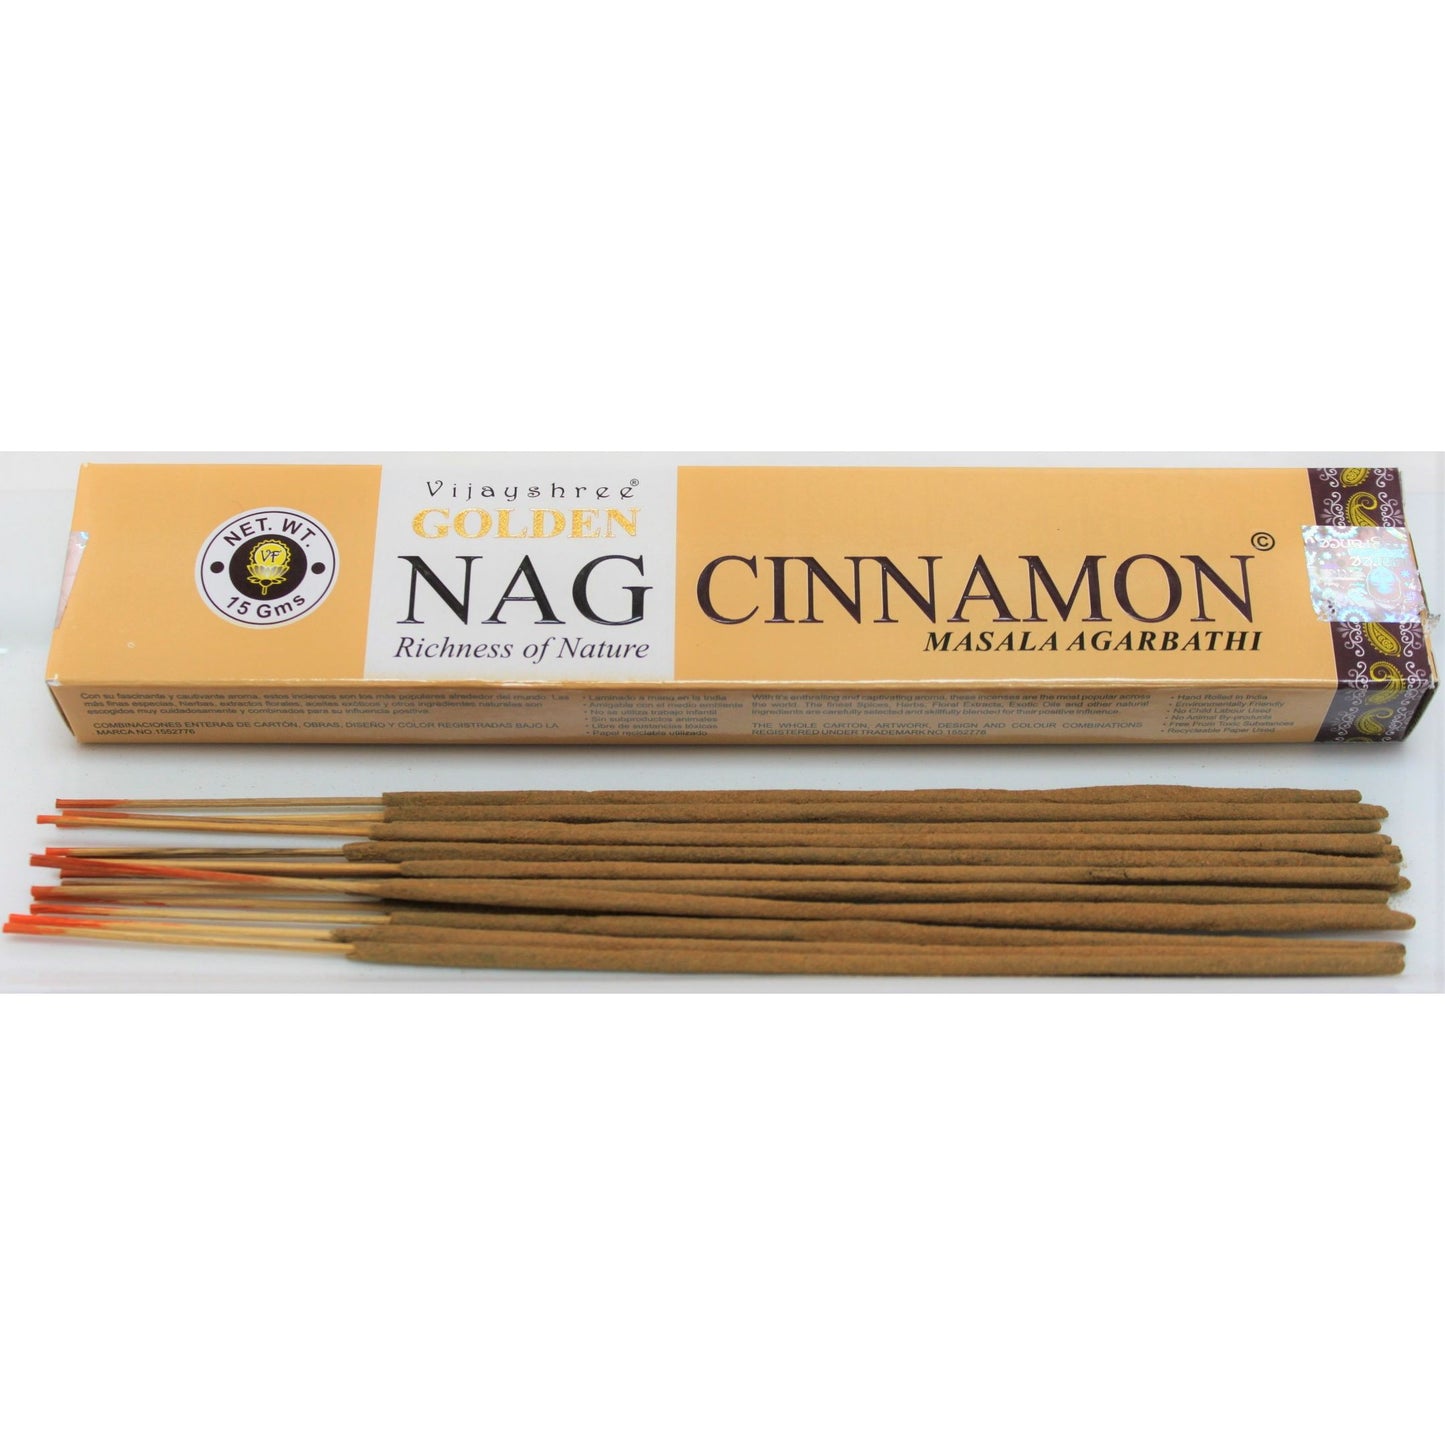 Vijayshree - Golden Nag, Cinnamon